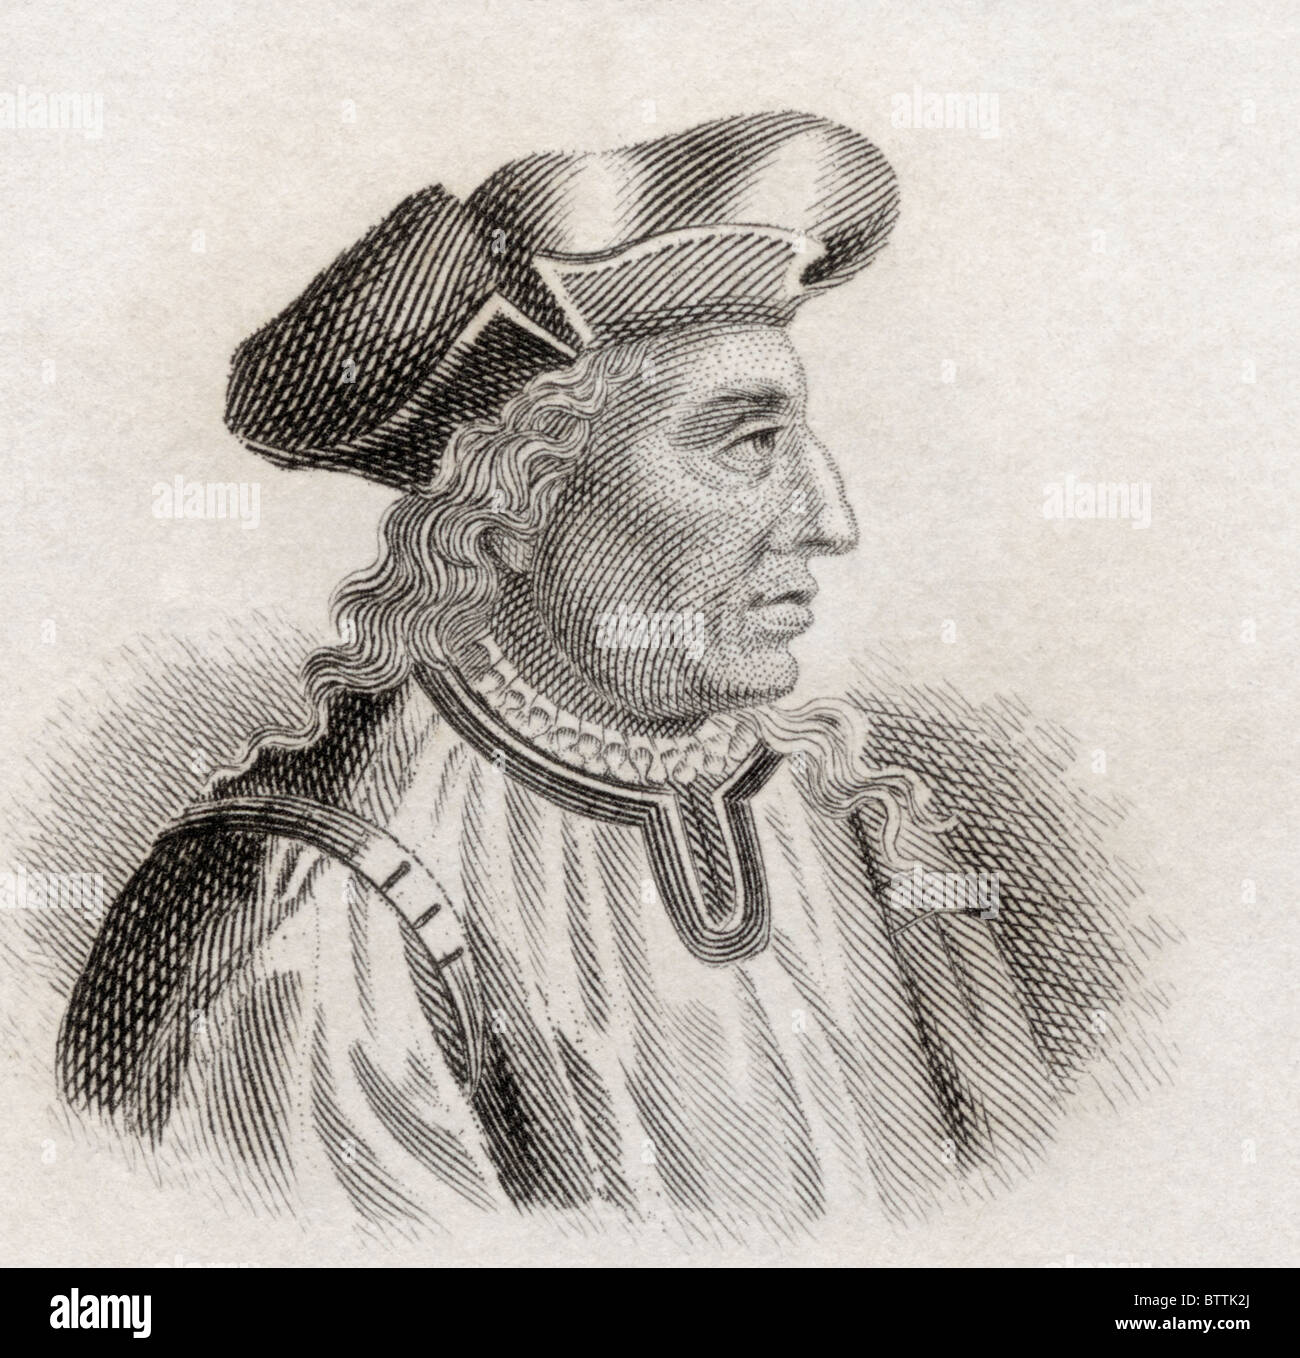 Niccolò di Bernardo dei Machiavelli, 1469 to 1527. Italian philosopher and writer. Stock Photo